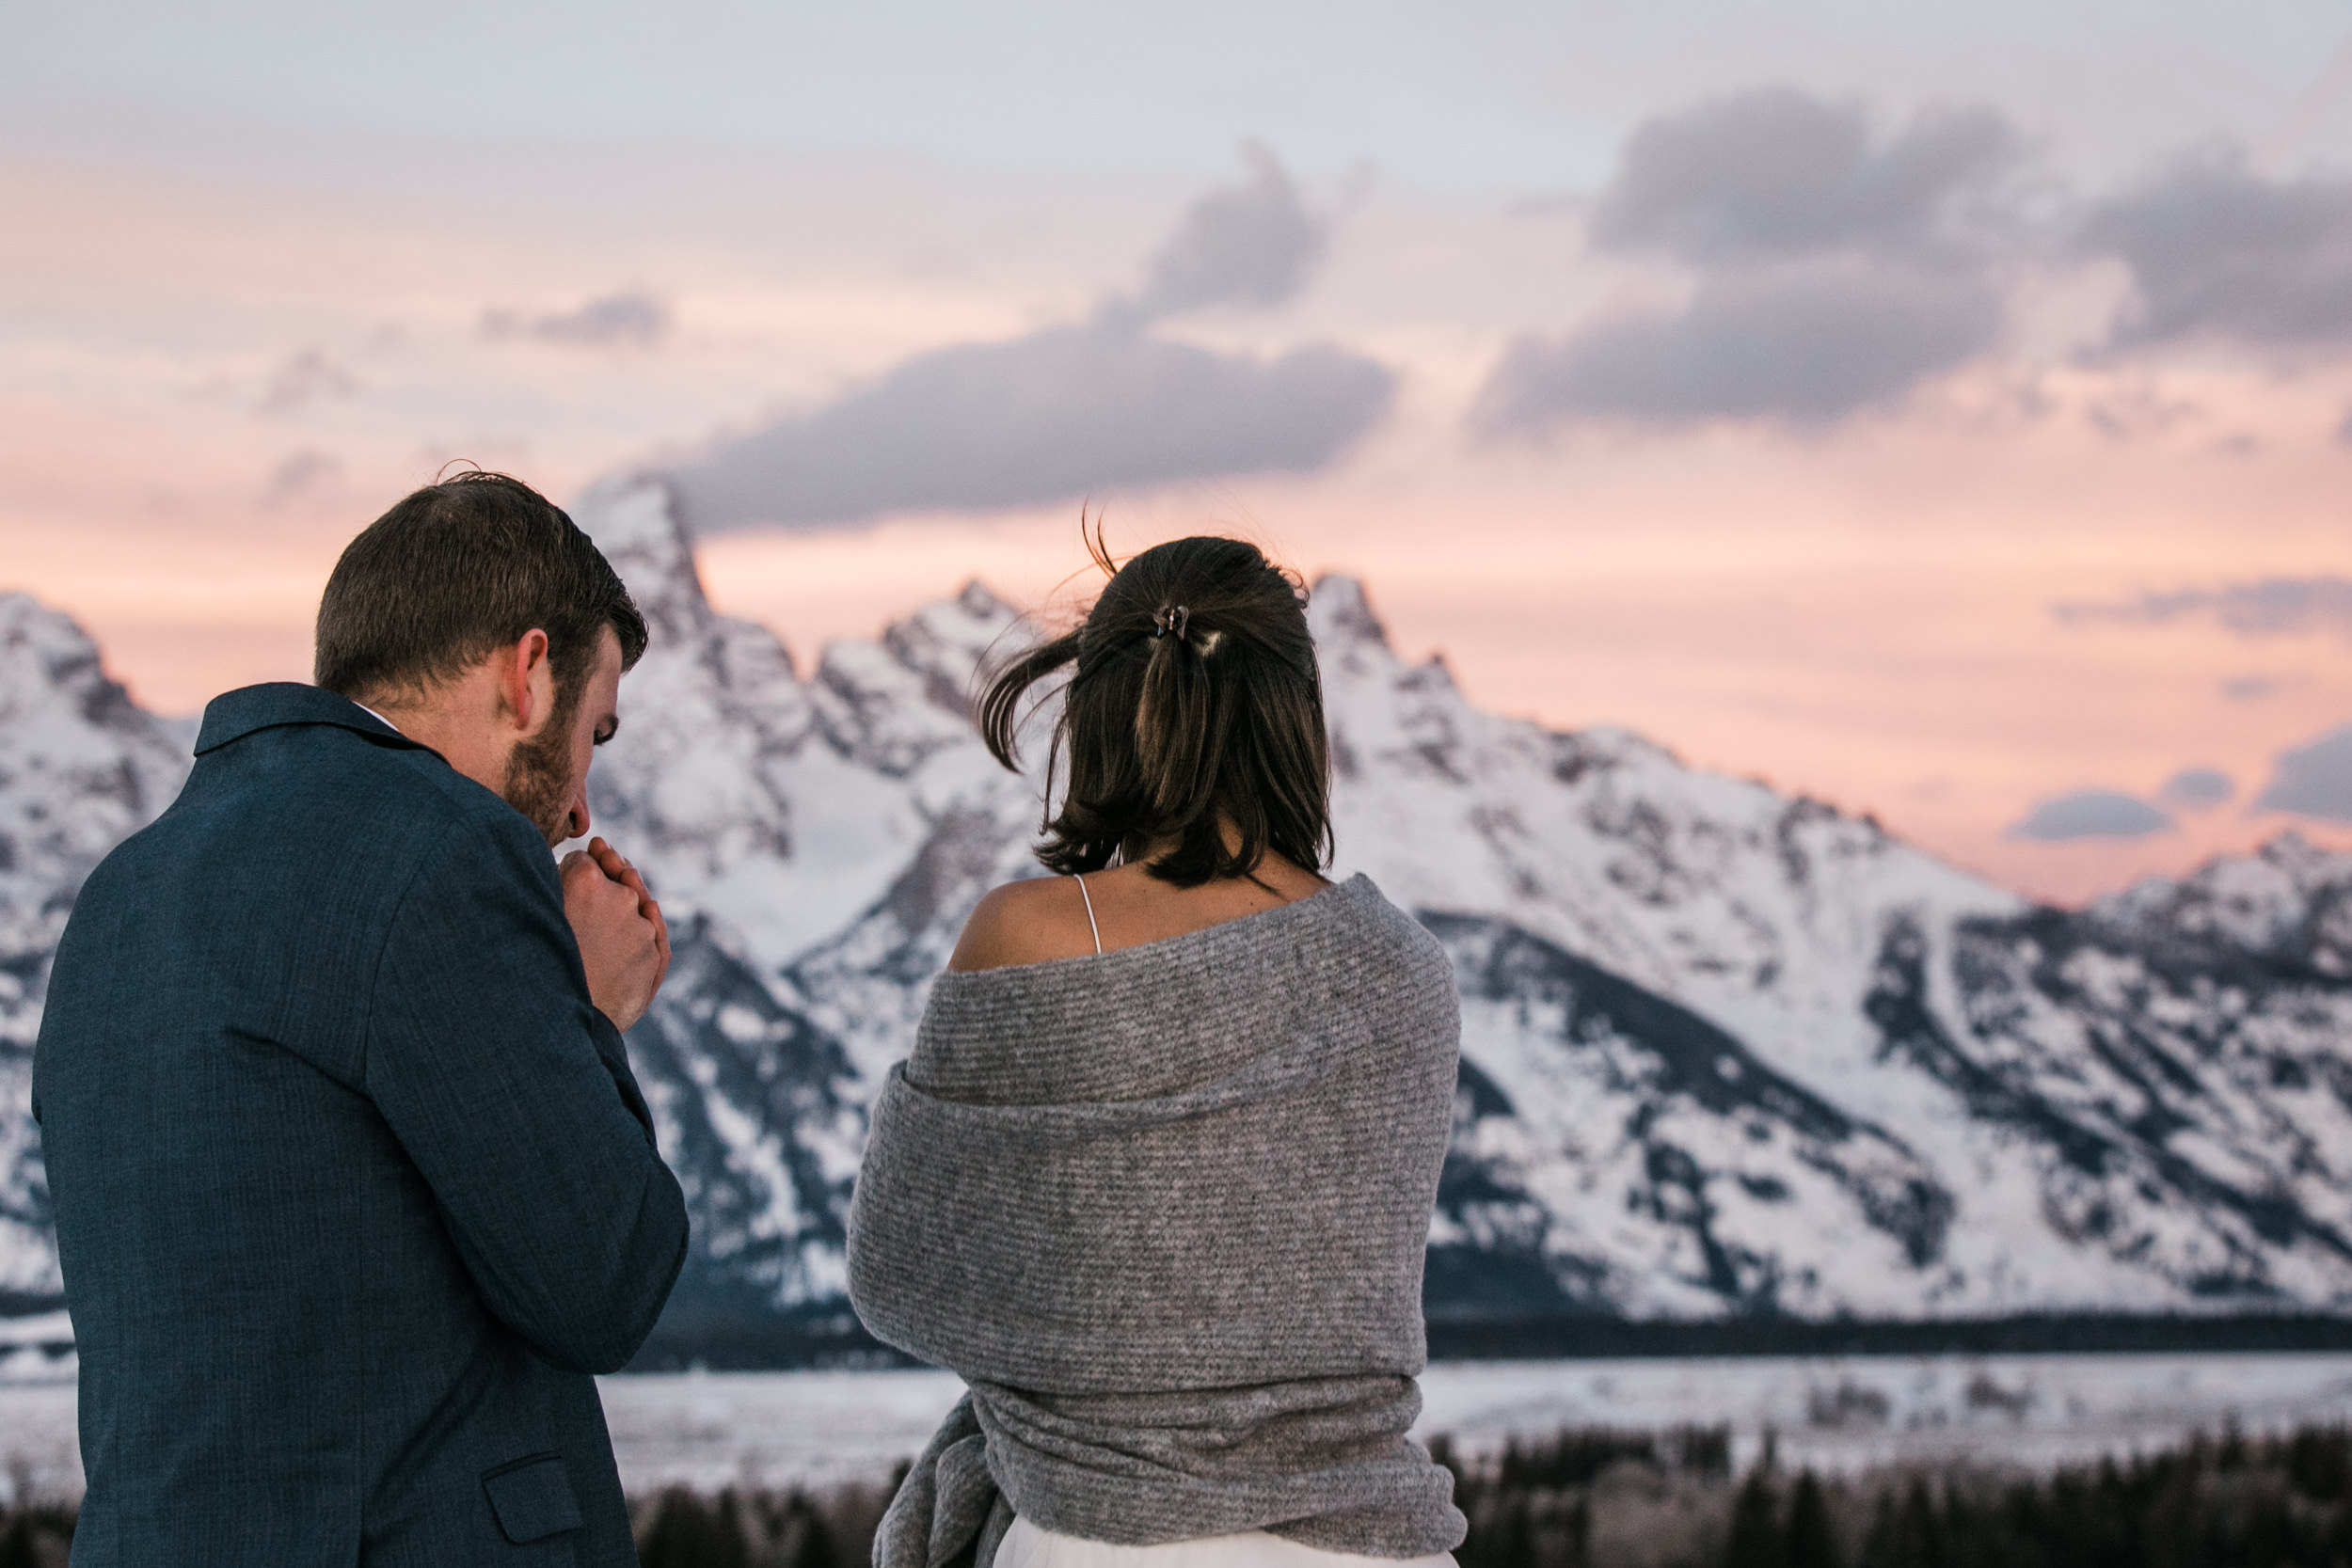 adventure elopement inspiration in grand teton national park | jackson hole engagement session | the hearnes adventure wedding photography